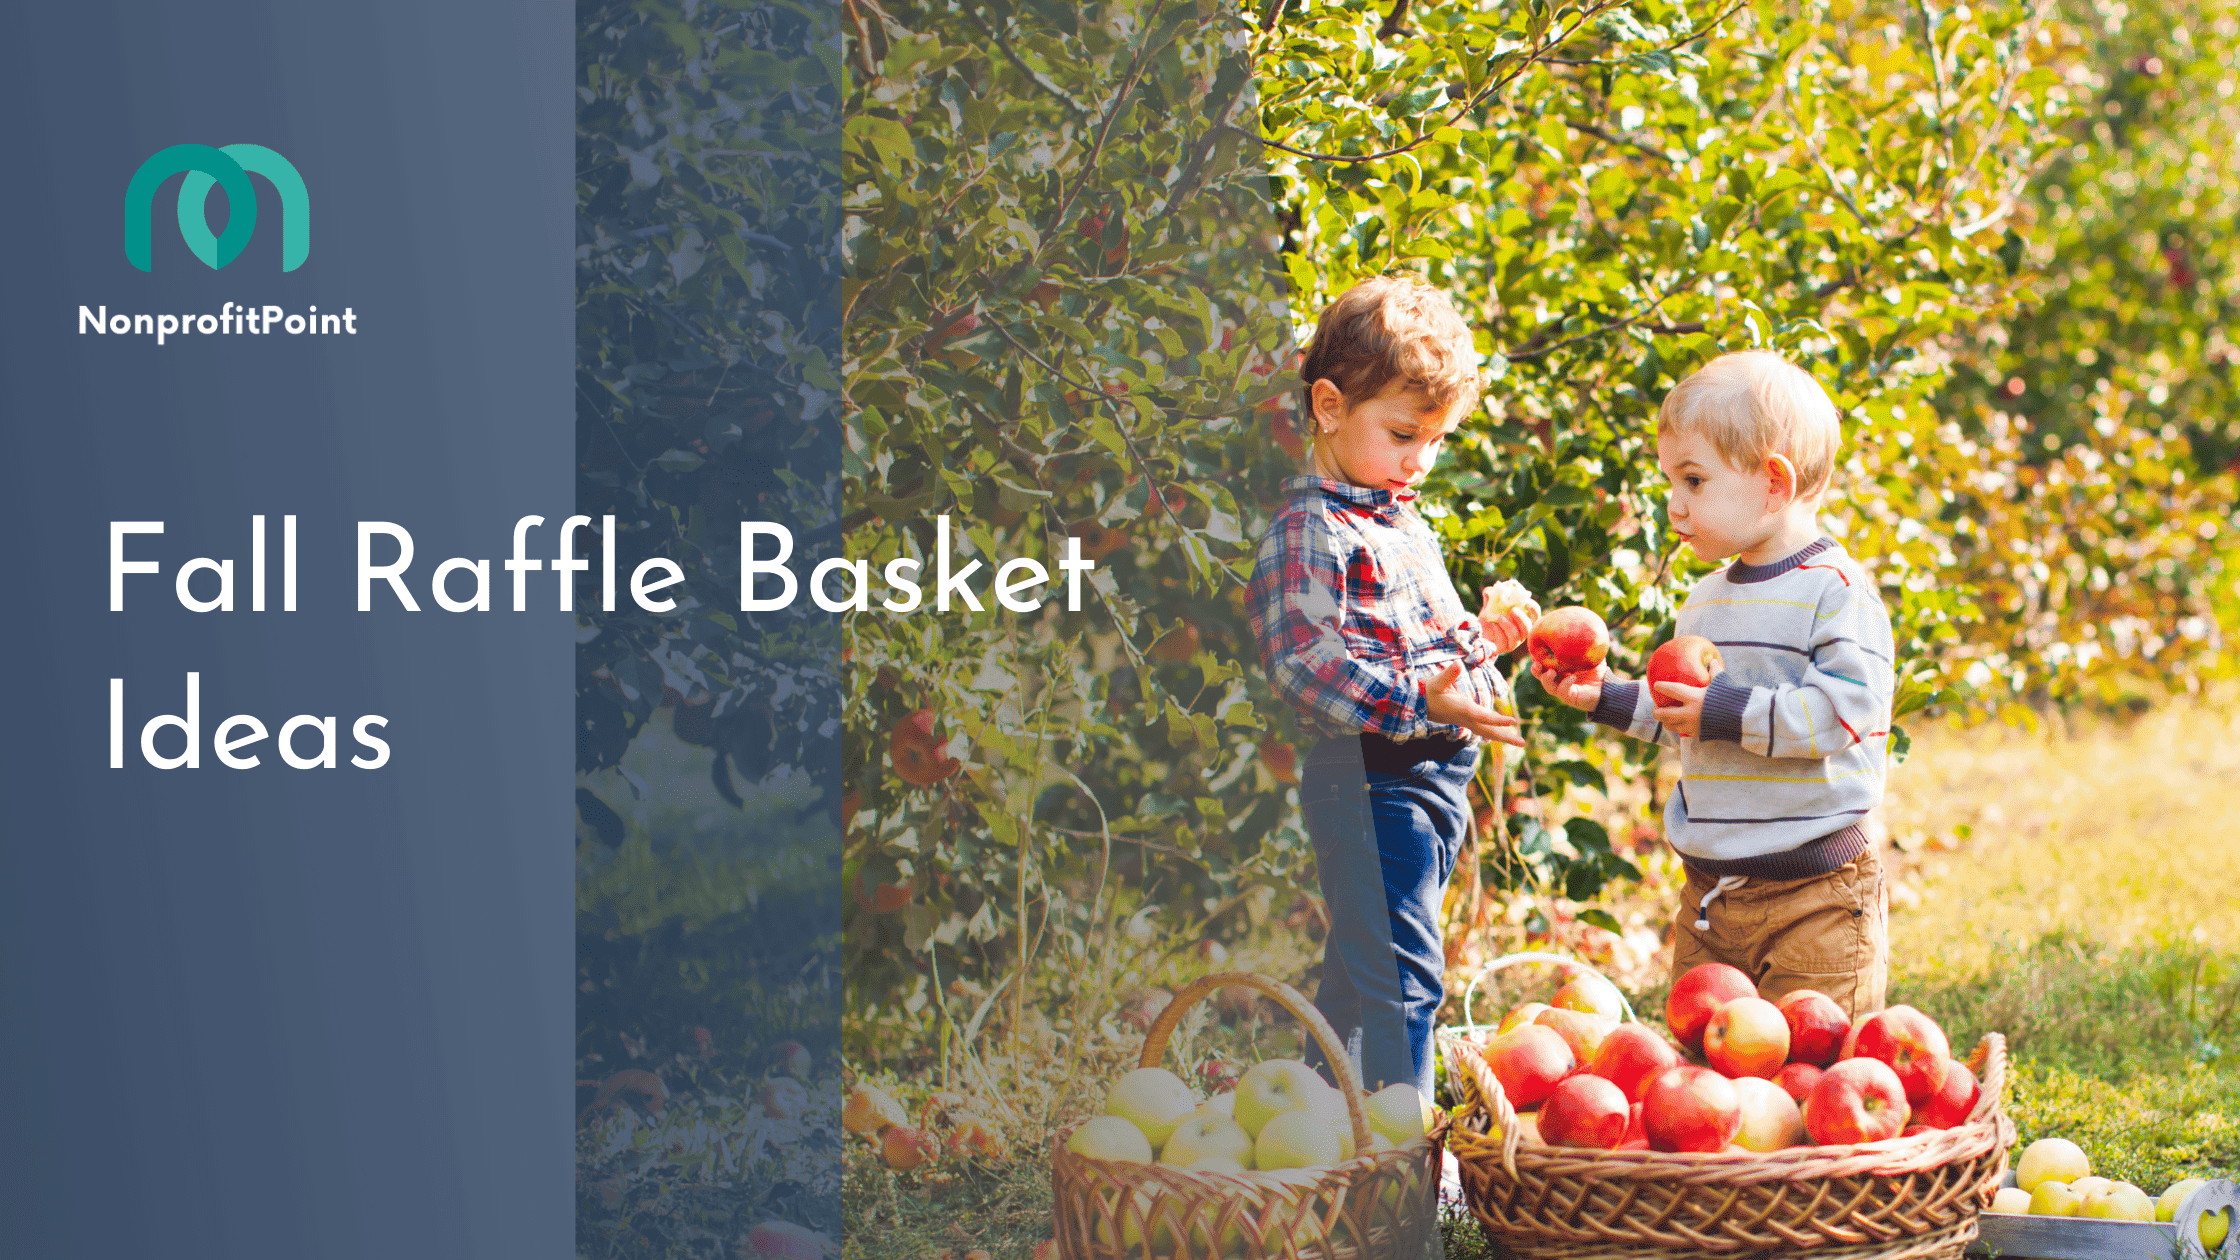 Fall Raffle Basket Ideas